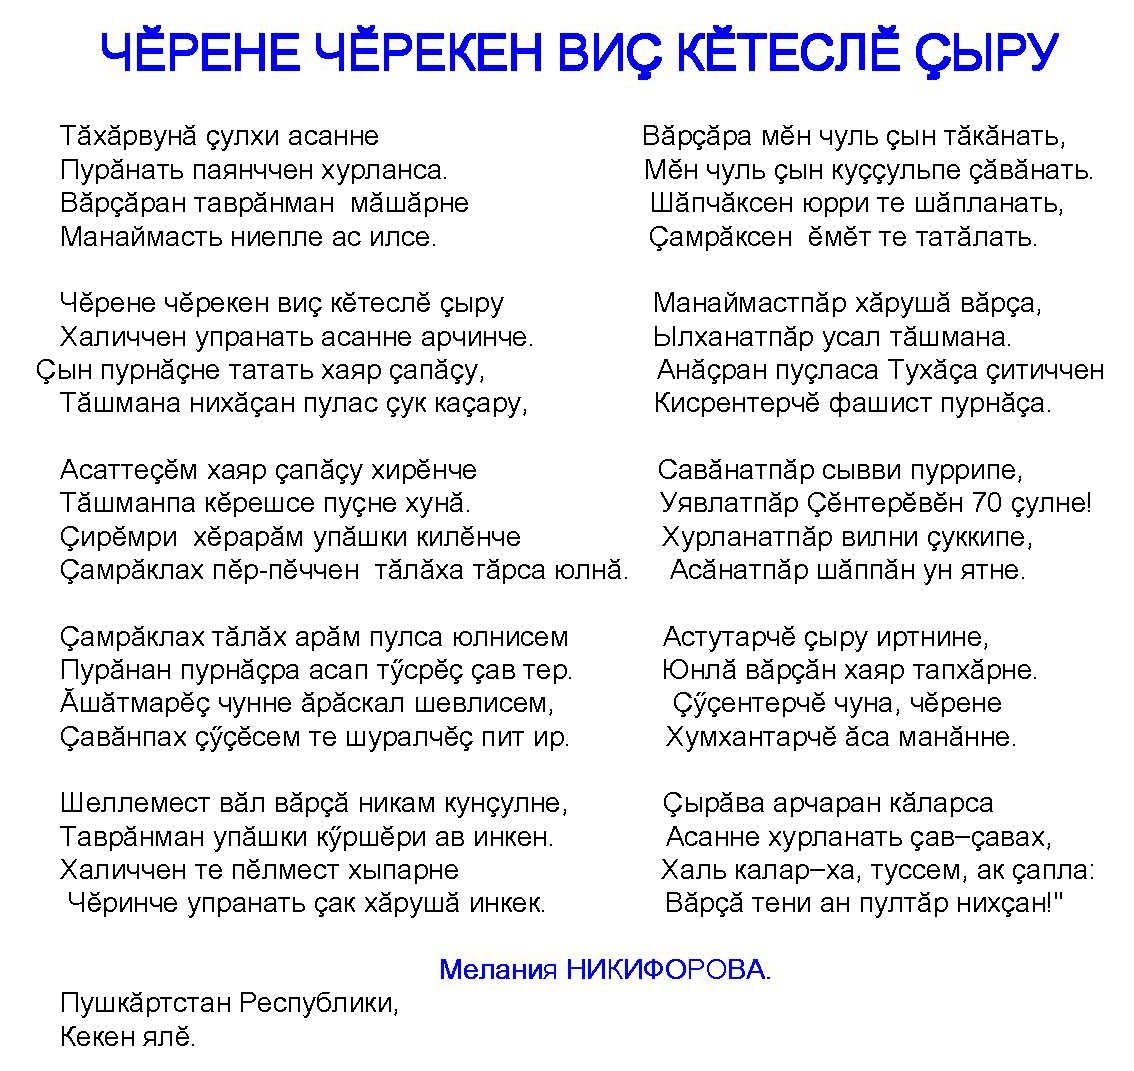 Маме стих на чувашском. Стихотворение на чувашском языке. Стихи о Чувашии на чувашском языке. Стишок на чувашском языке. Стихи поздравления на чувашском языке.